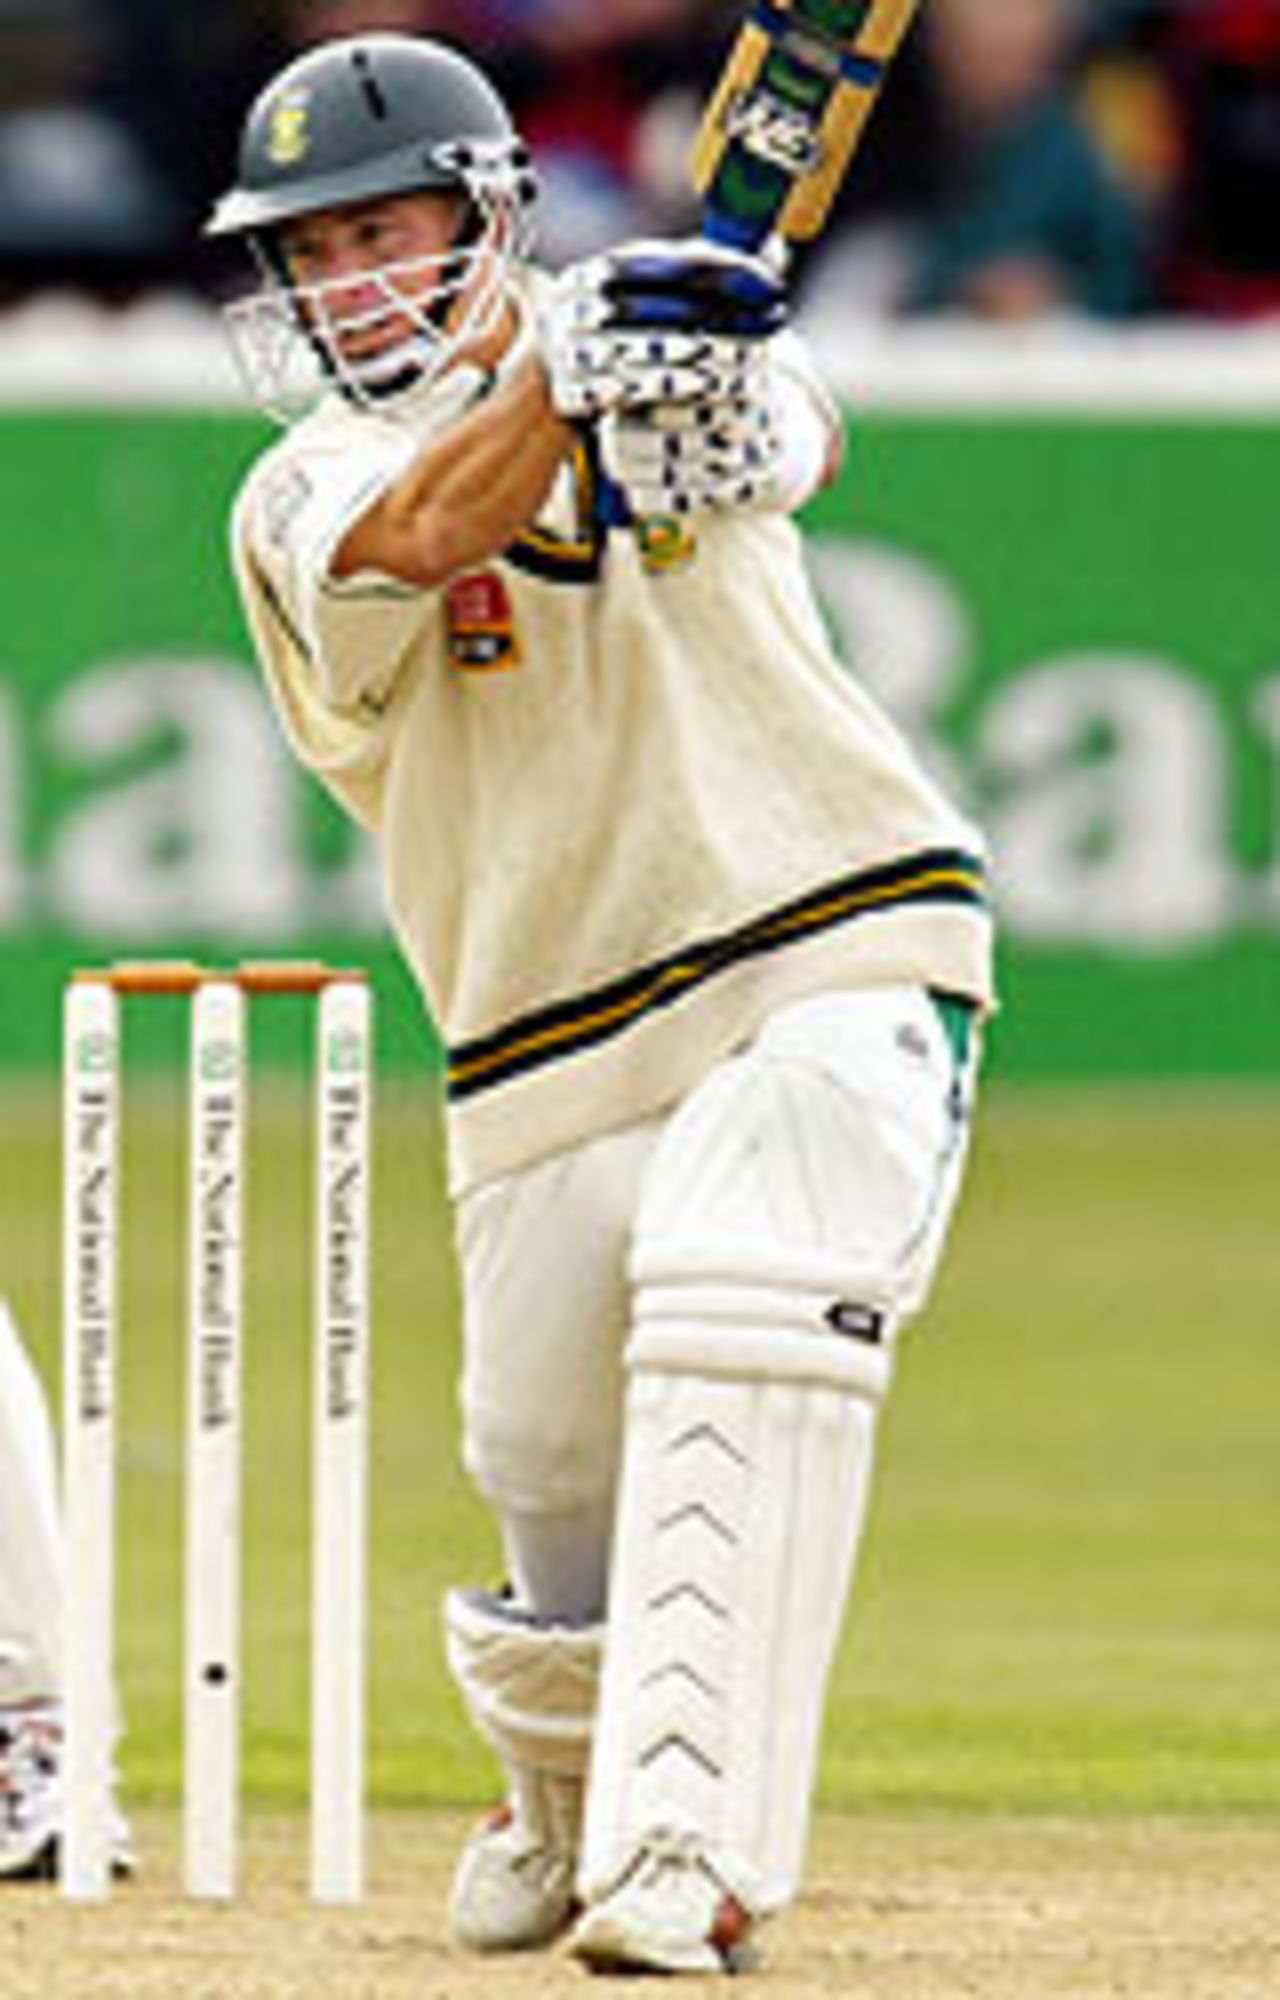 Herschelle Gibbs keeps on batting, New Zealand v South Africa, 3rd Test, Wellington, 2nd day, March 27, 2004